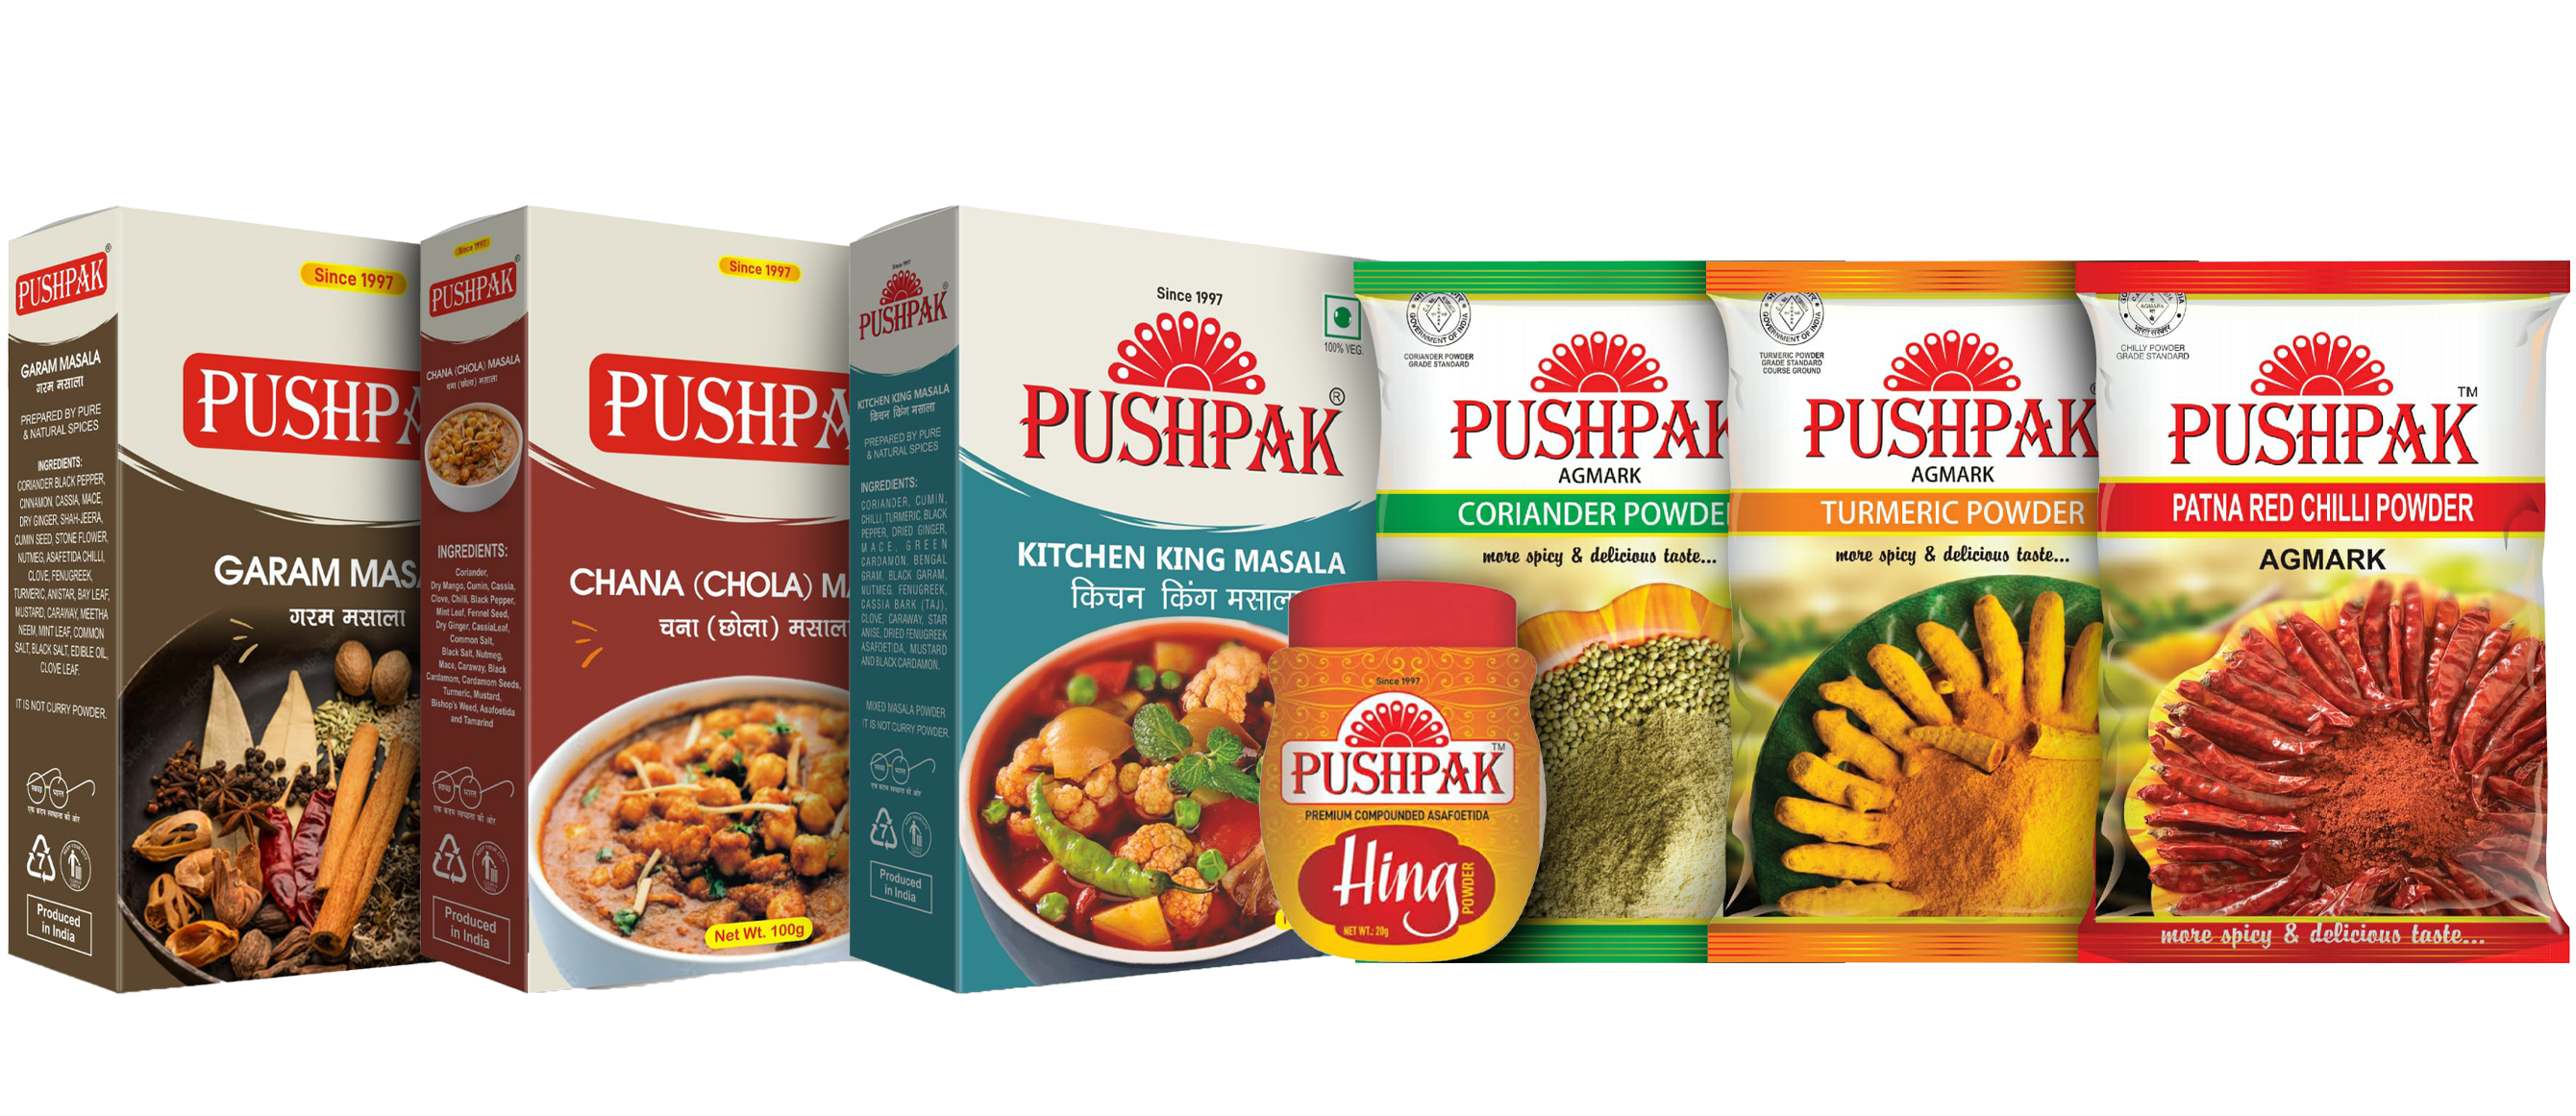 Pushpak Masala products - CEO VINE